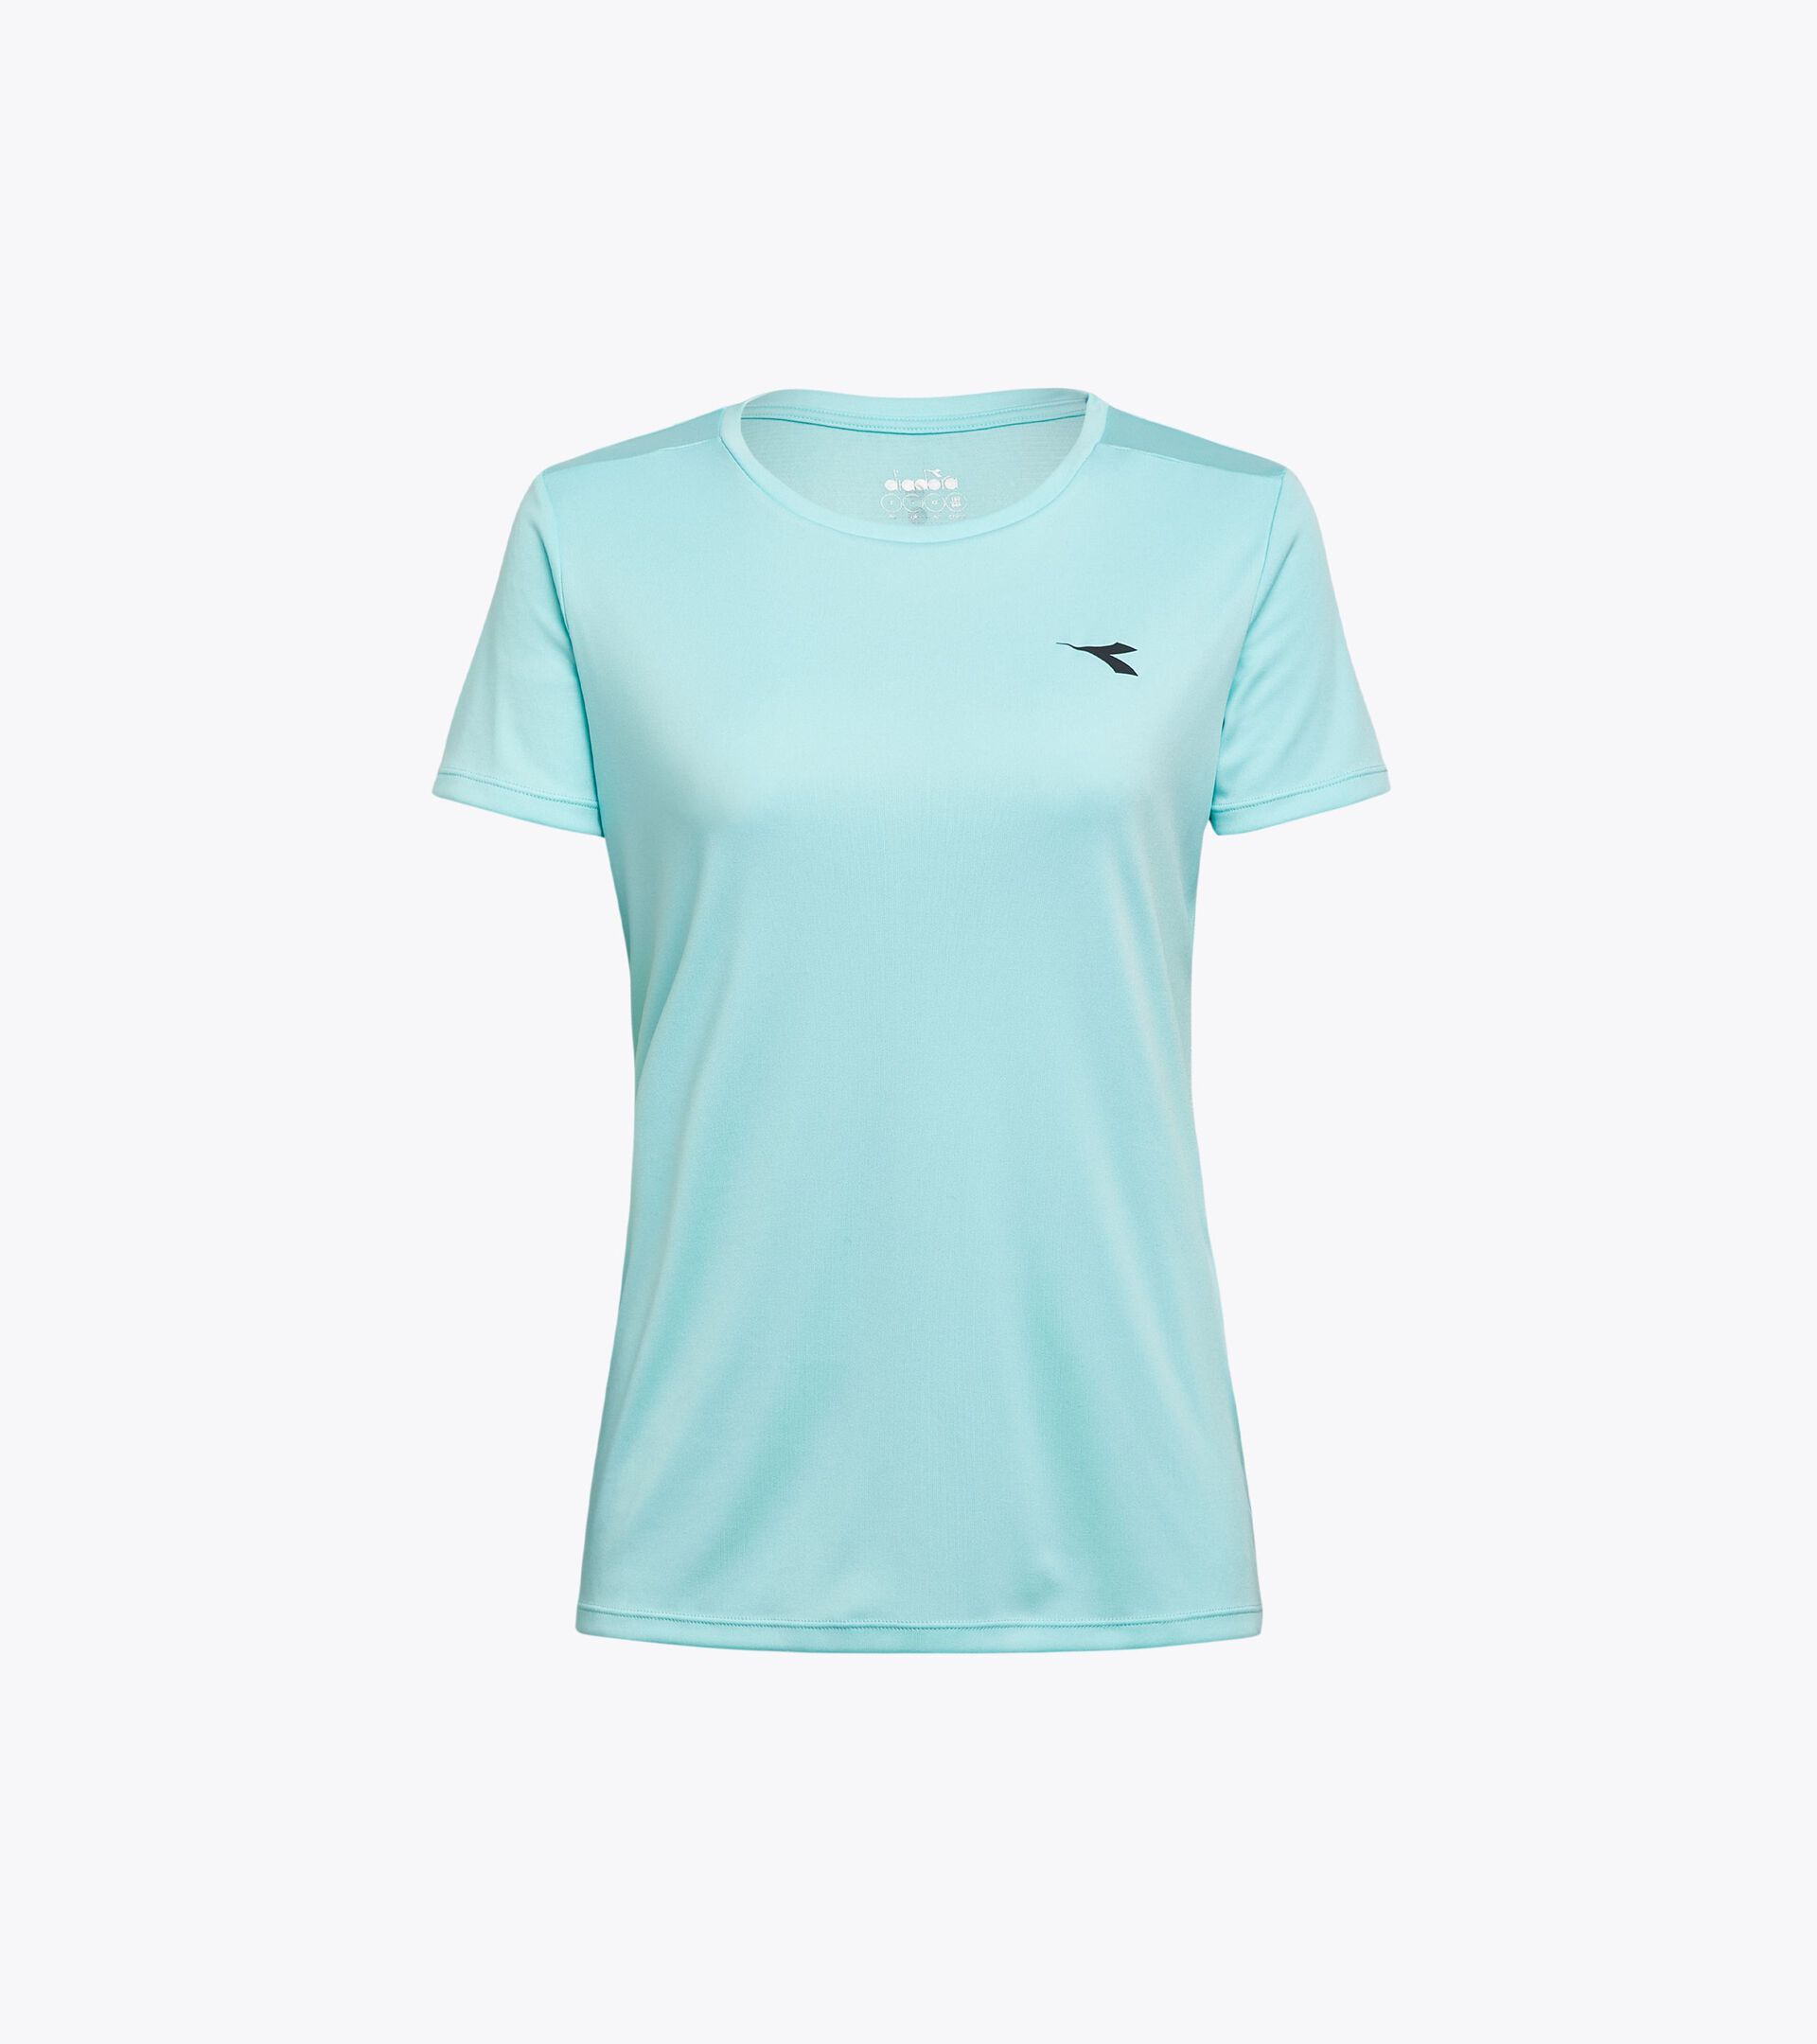 Camiseta deportiva - Mujer L. SS T-SHIRT RUN AZUL ARUBA - Diadora